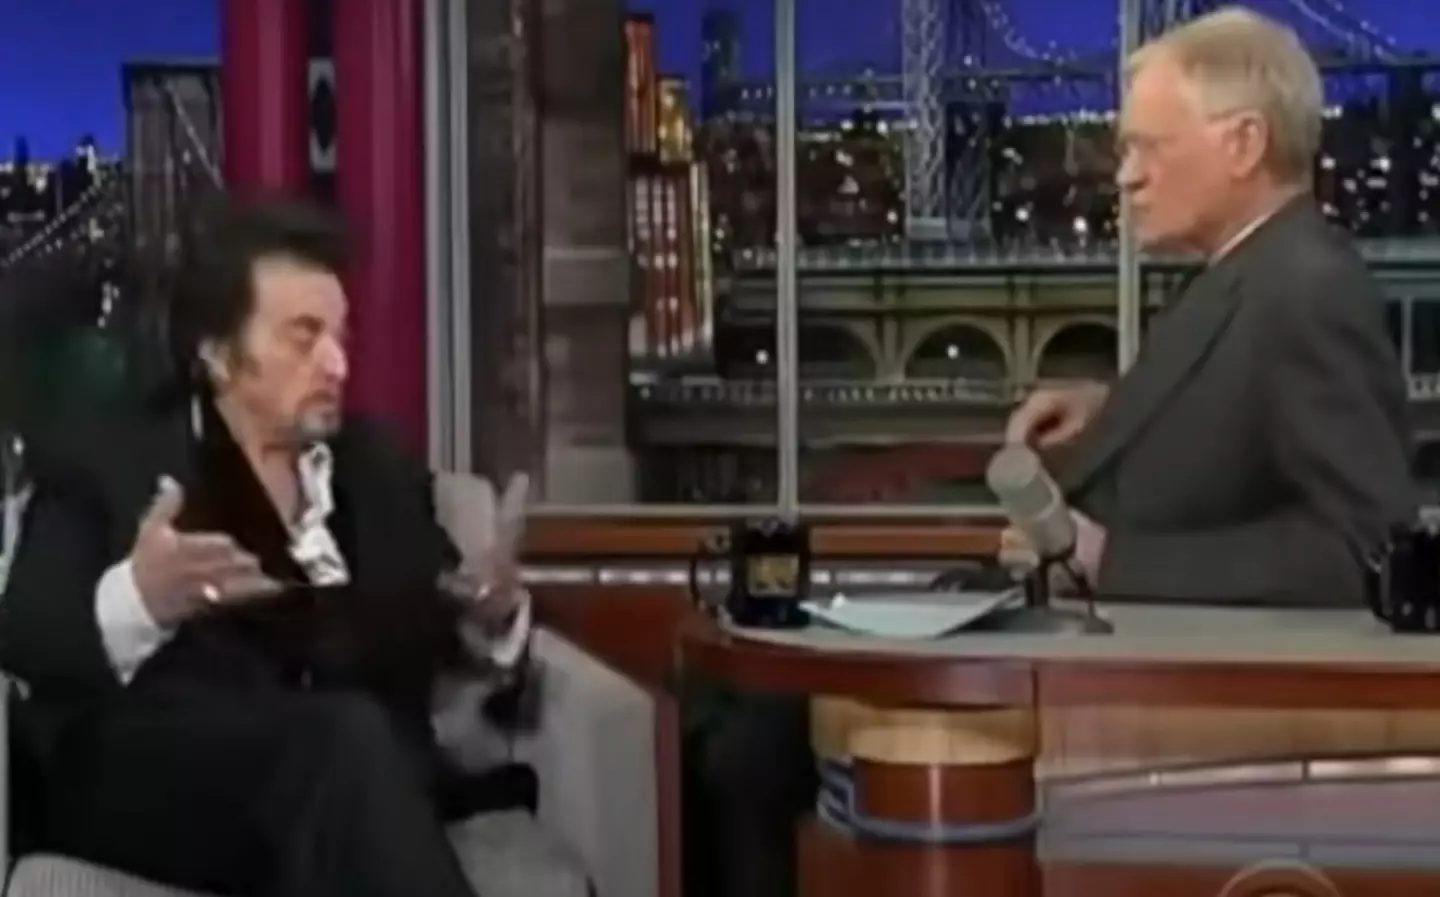 Al Pacino later ended up on David Letterman's show explaining the joke.